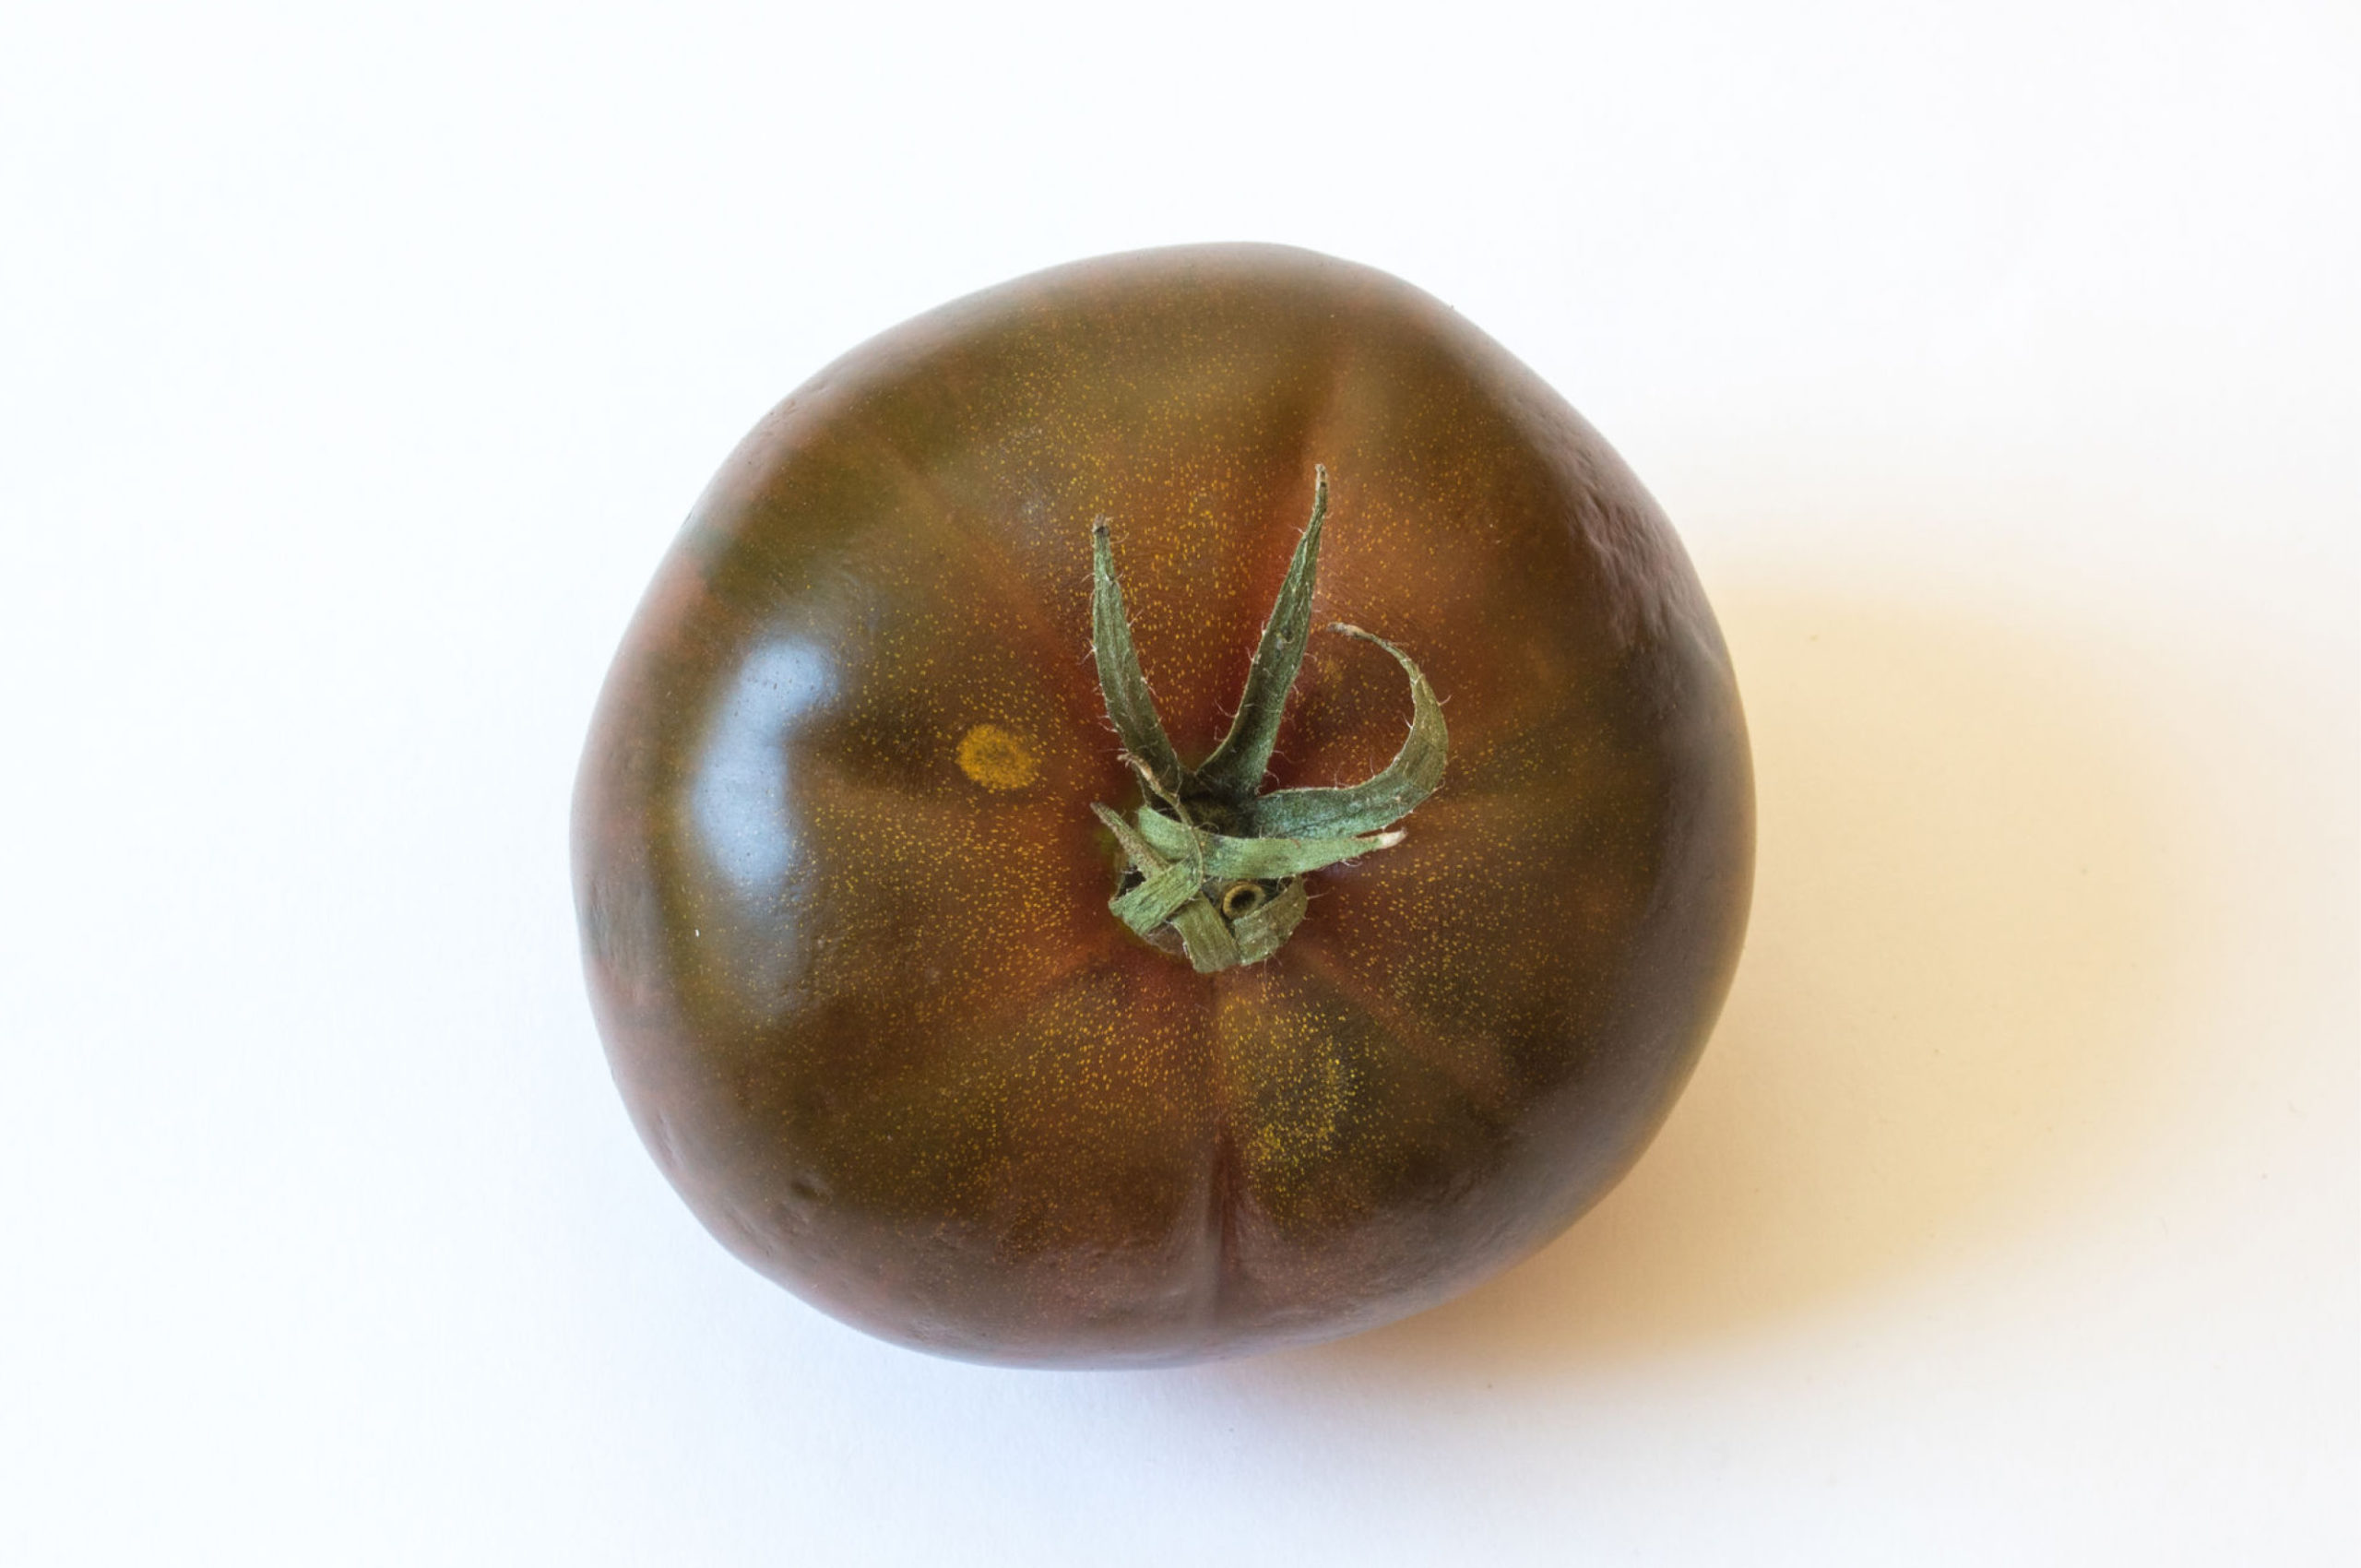 Cherokee Purple Tomato (Heirloom slicer)